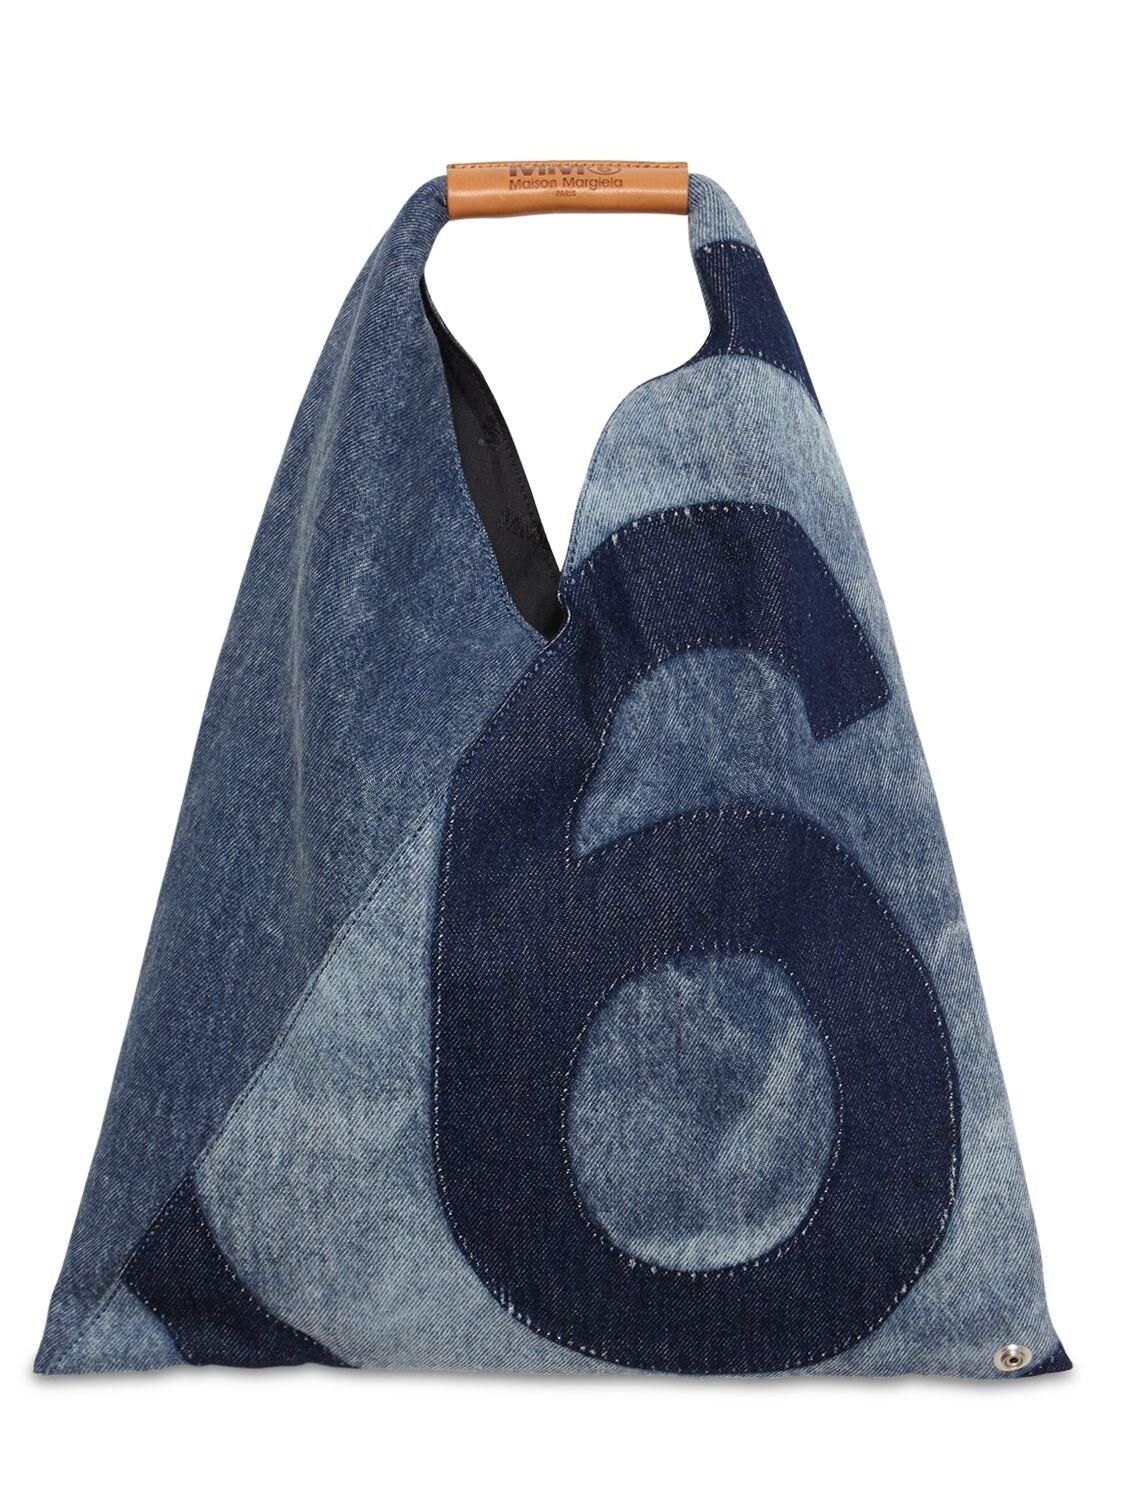 MM6 by Maison Martin Margiela Japanese Small Denim Bag in Blue | Lyst